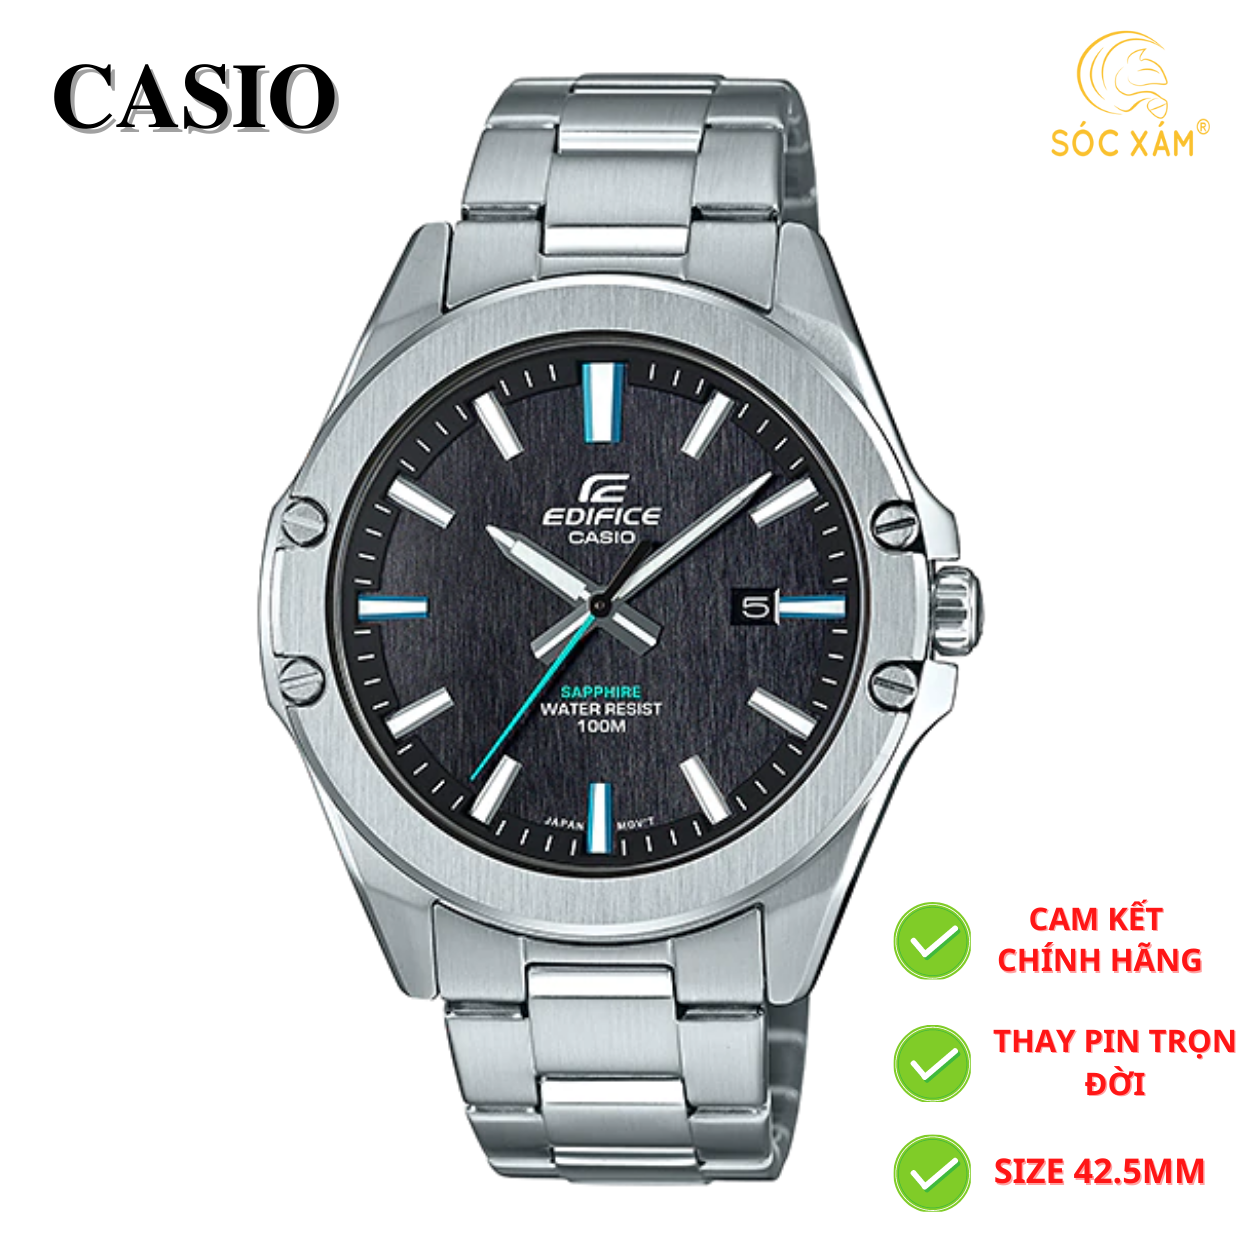 Đồng hồ nam đeo tay thời trang Casio Edifice EFR